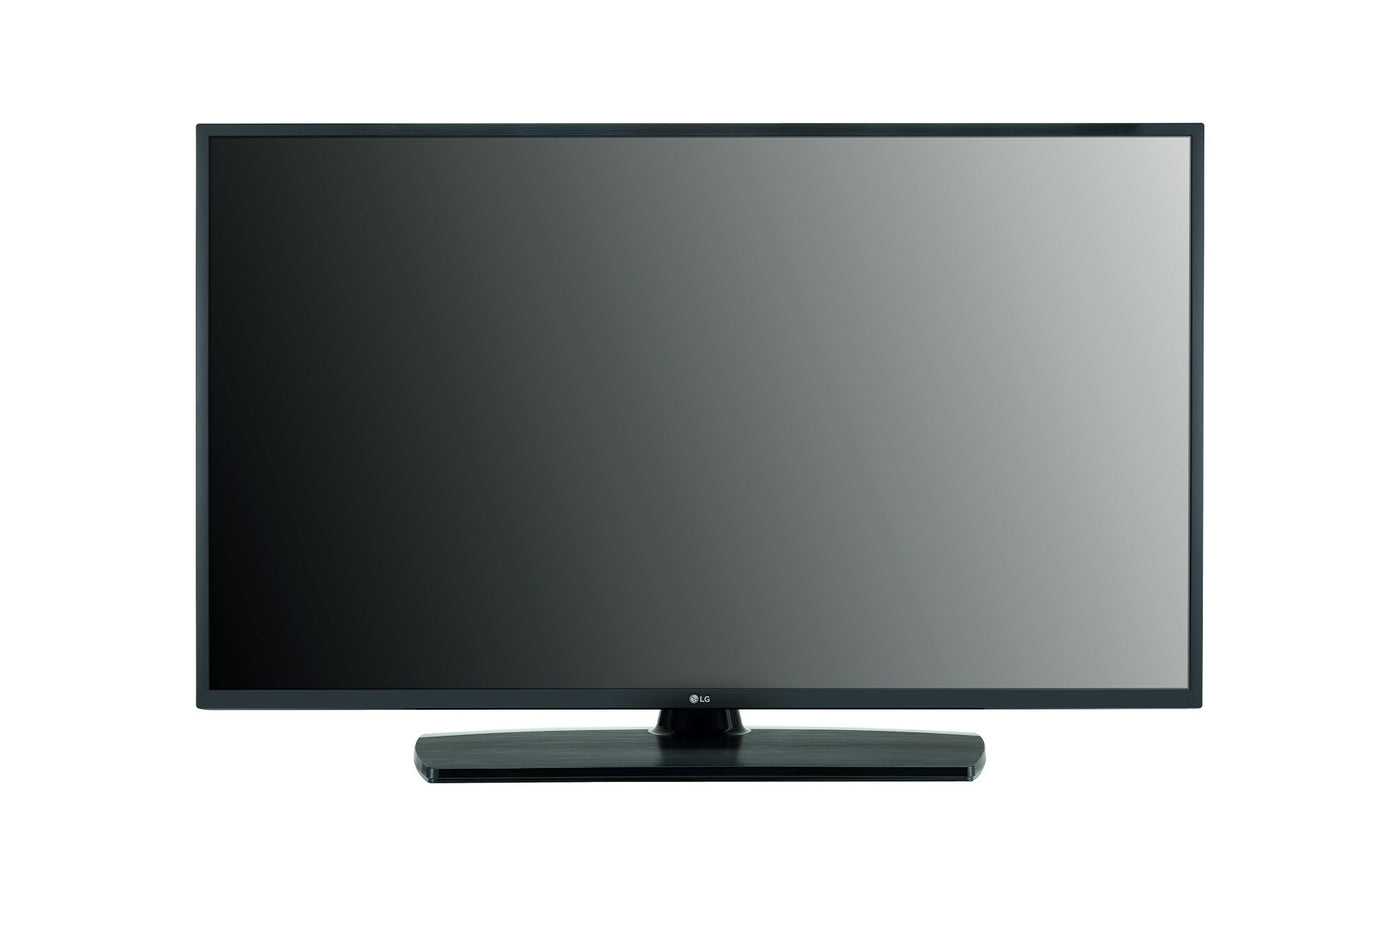 LG 65UM670H9 65" Pro:Centric Smart Hospitality 4K UHD TV with Slim Depth and Pro:Idiom Direct